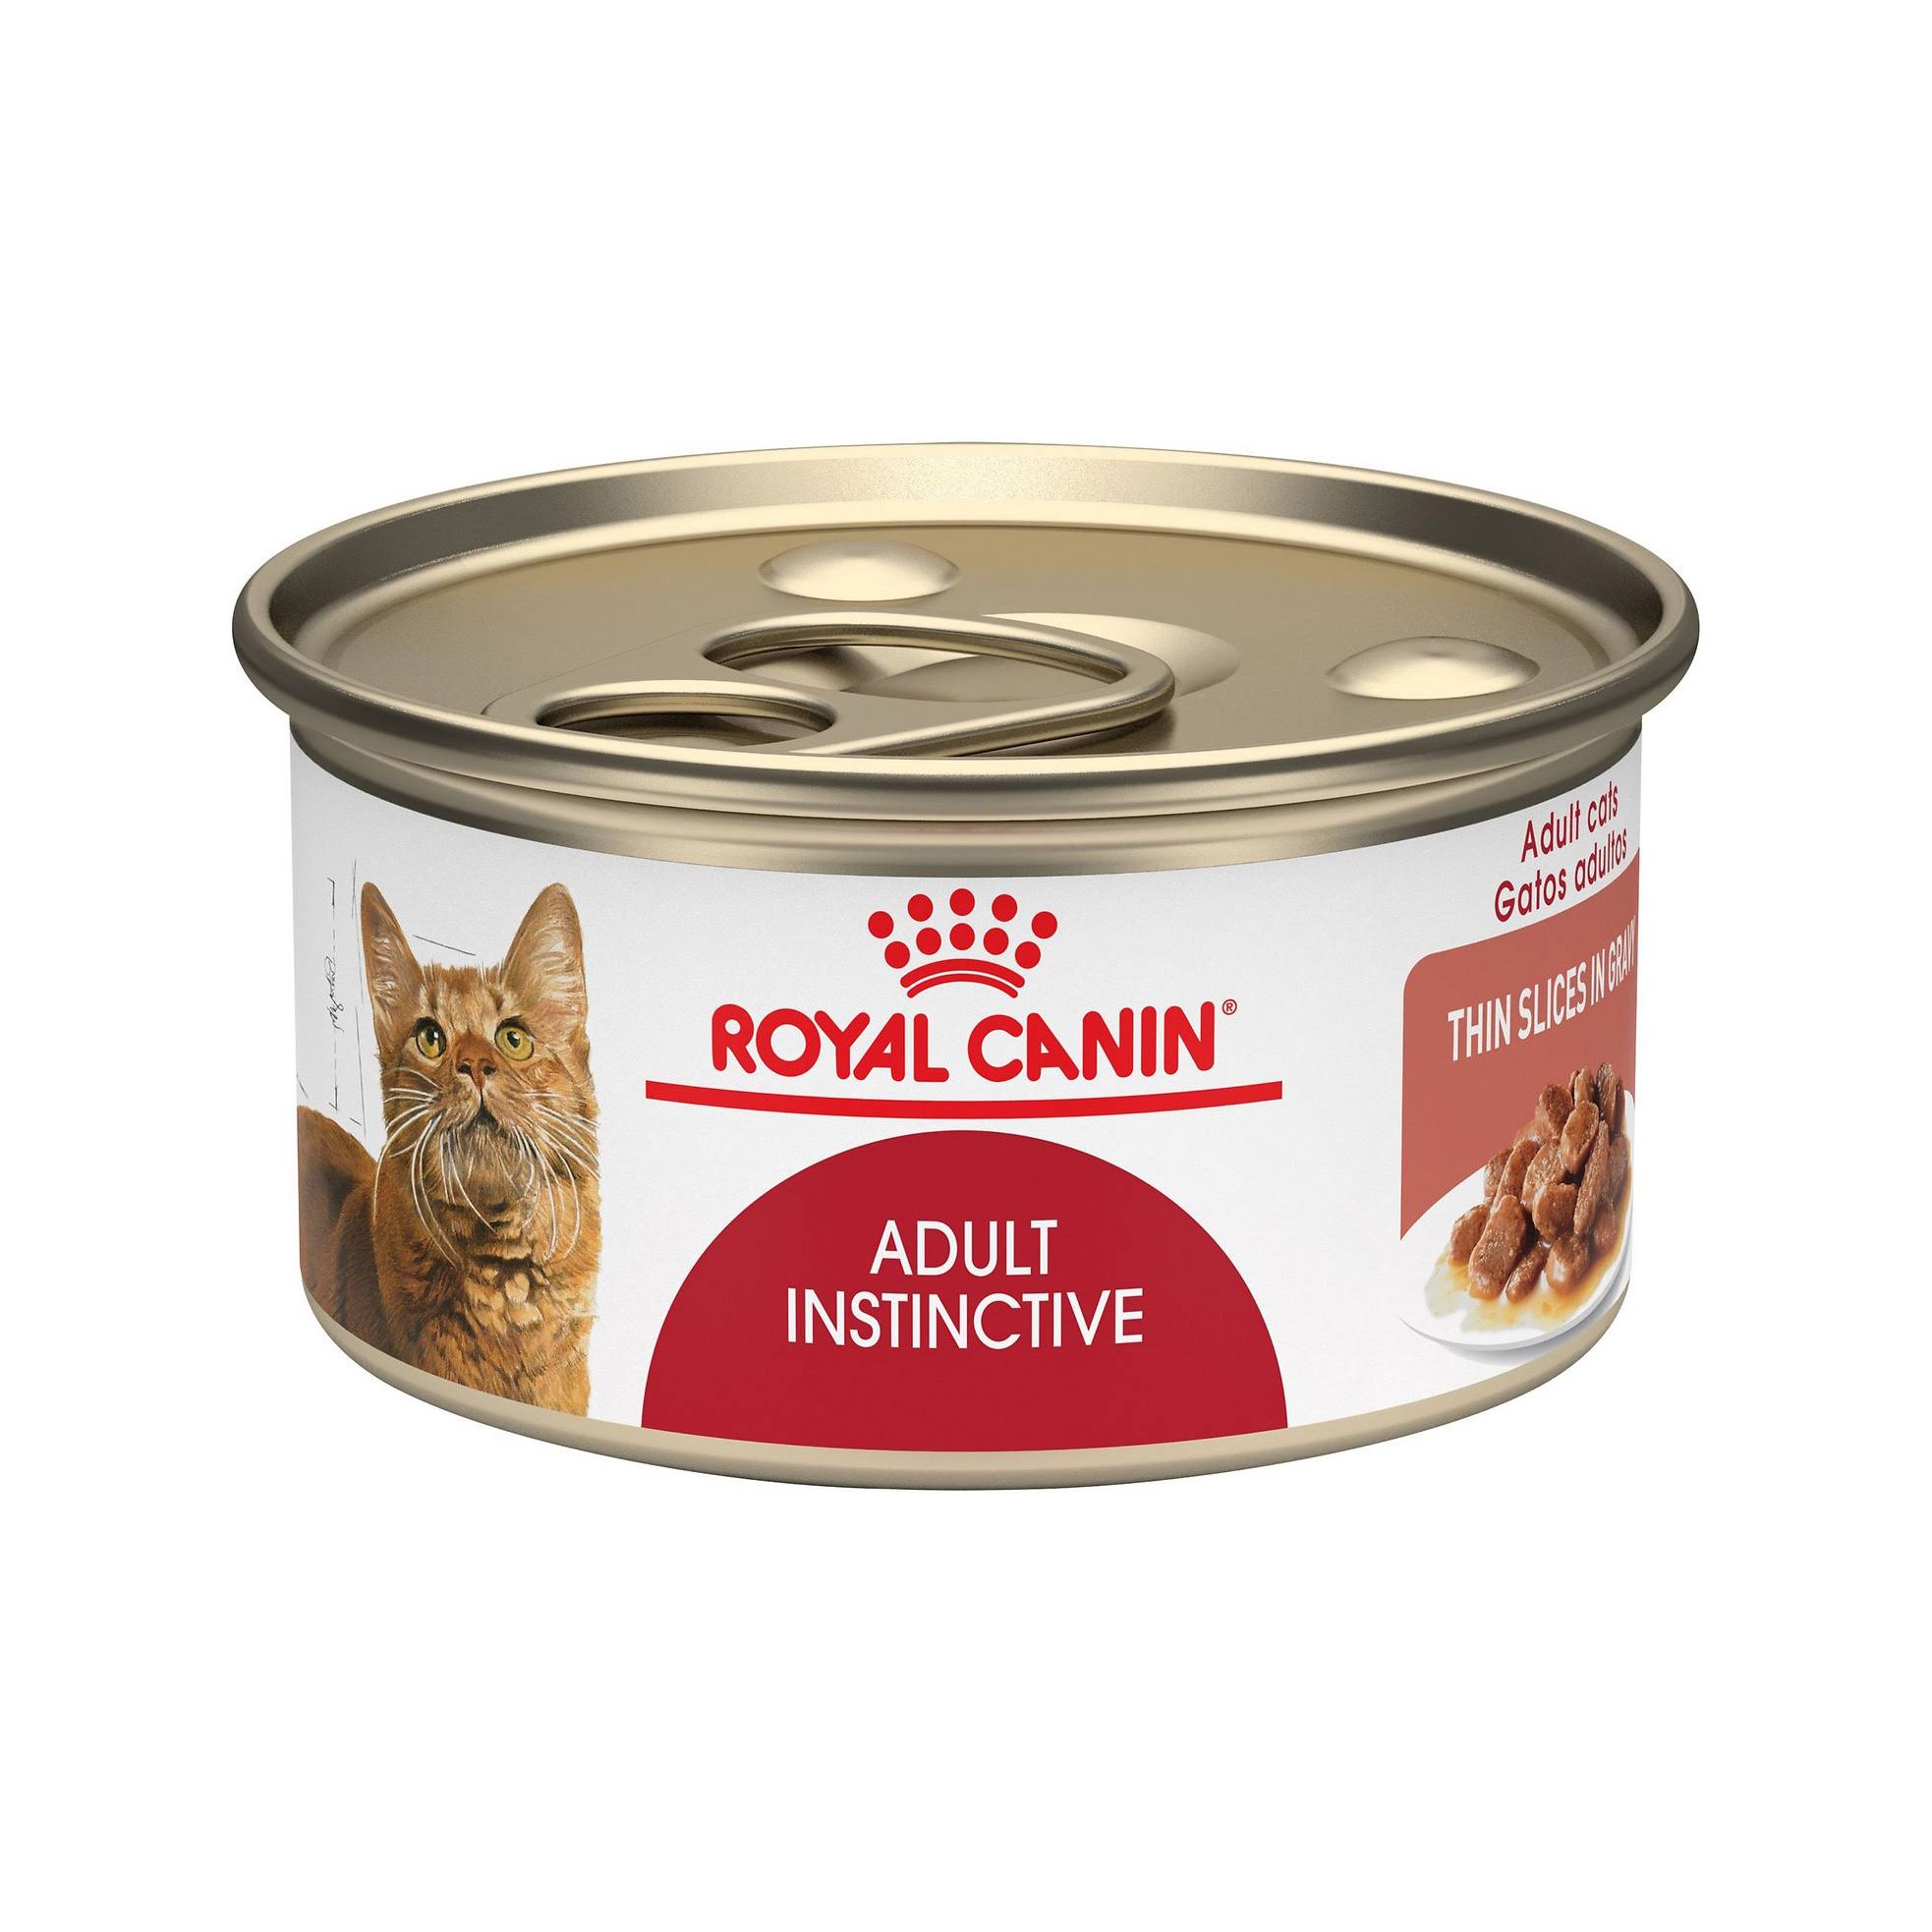 Royal Canin Canned Cat Food - Adult Instinctive, 3oz